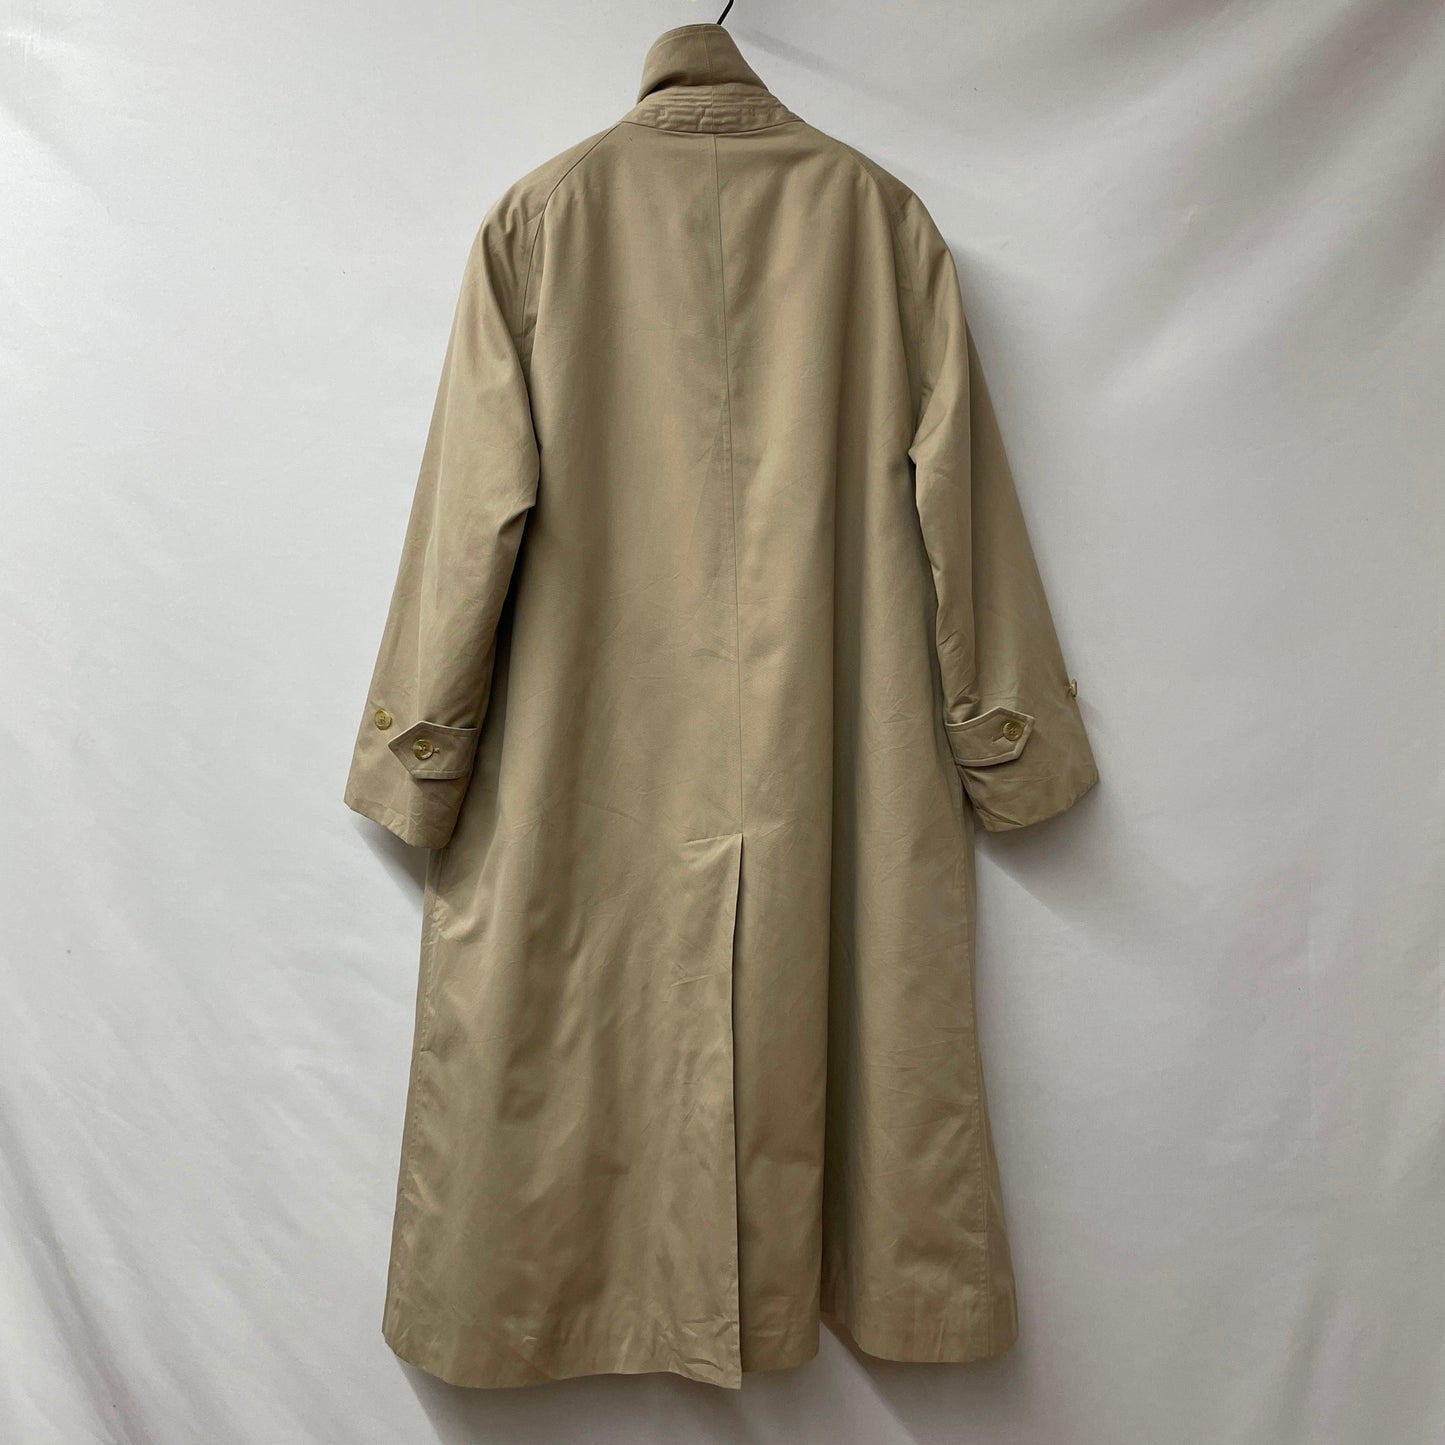 Burberrys coat Burmacan coat single sleeve stainless steel collar made in england rider coat